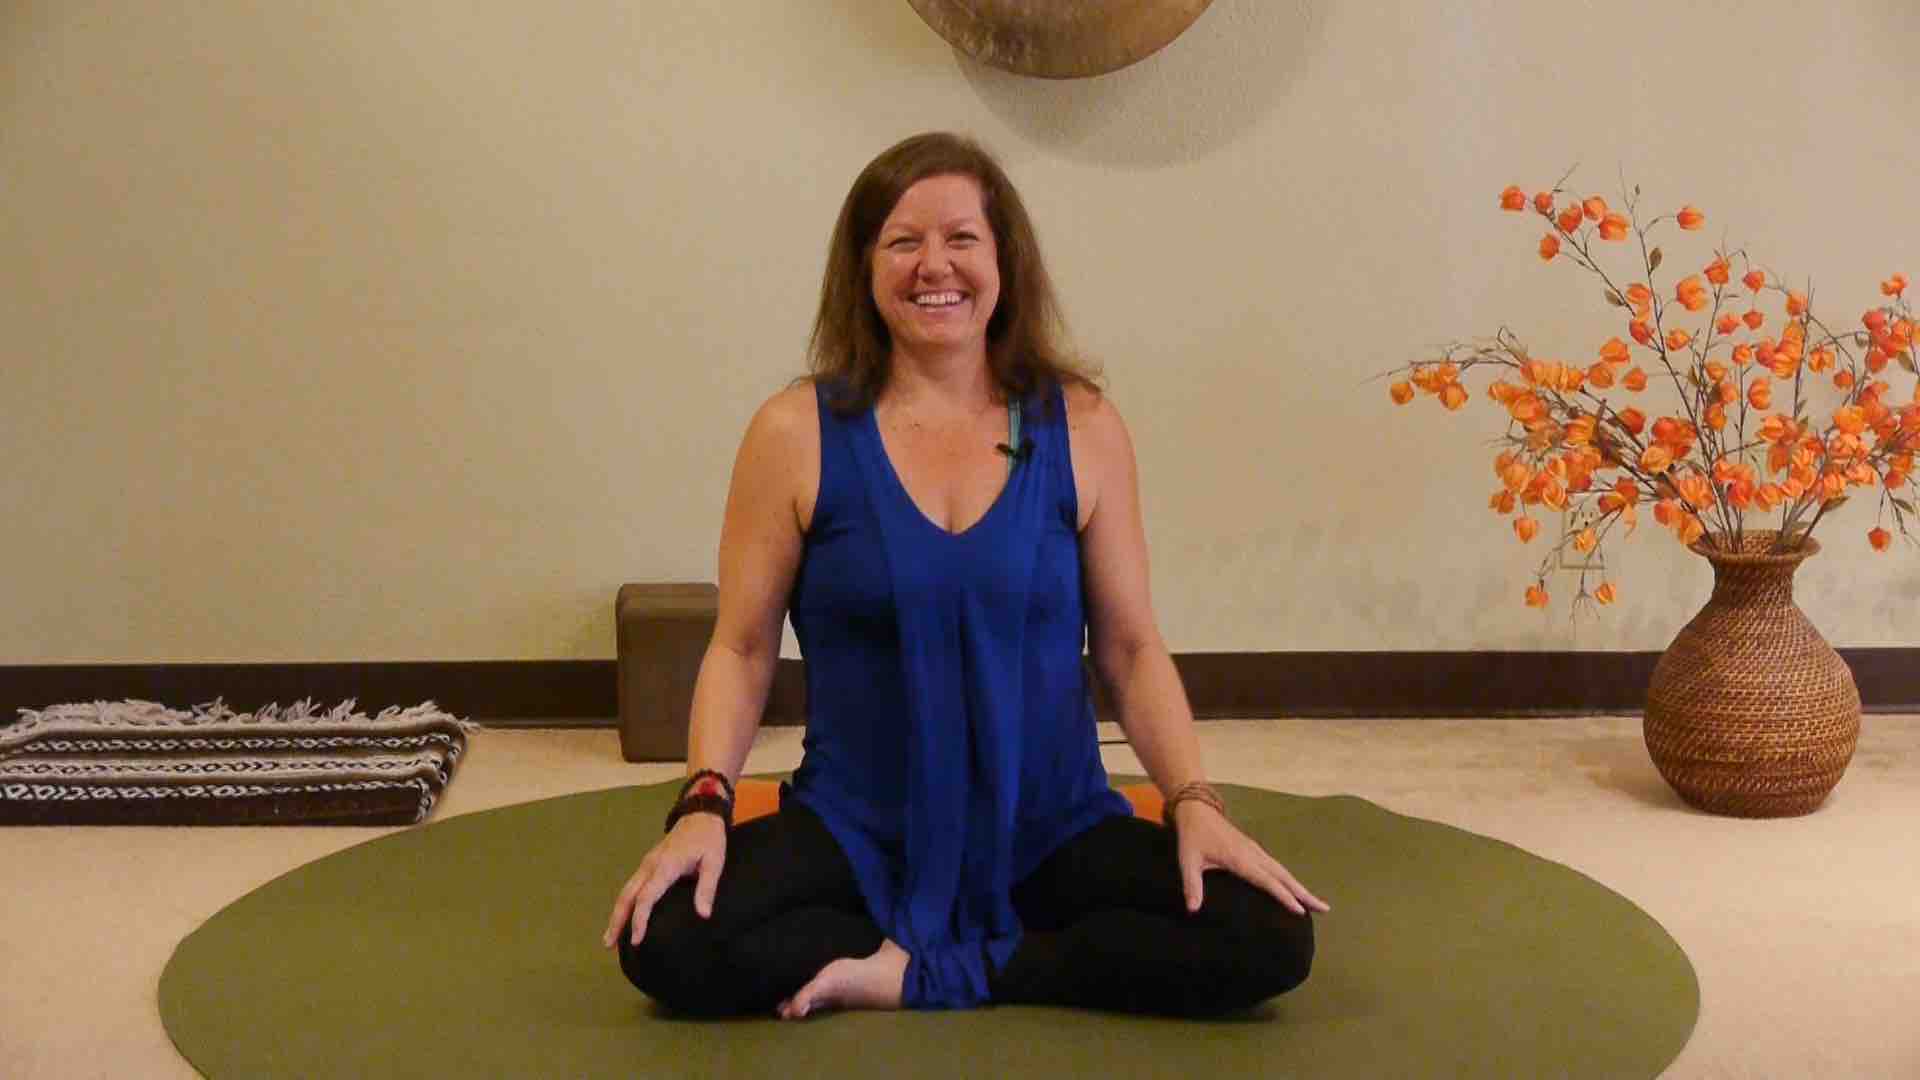 Dannette Mason Slow Down with Gentle Yoga